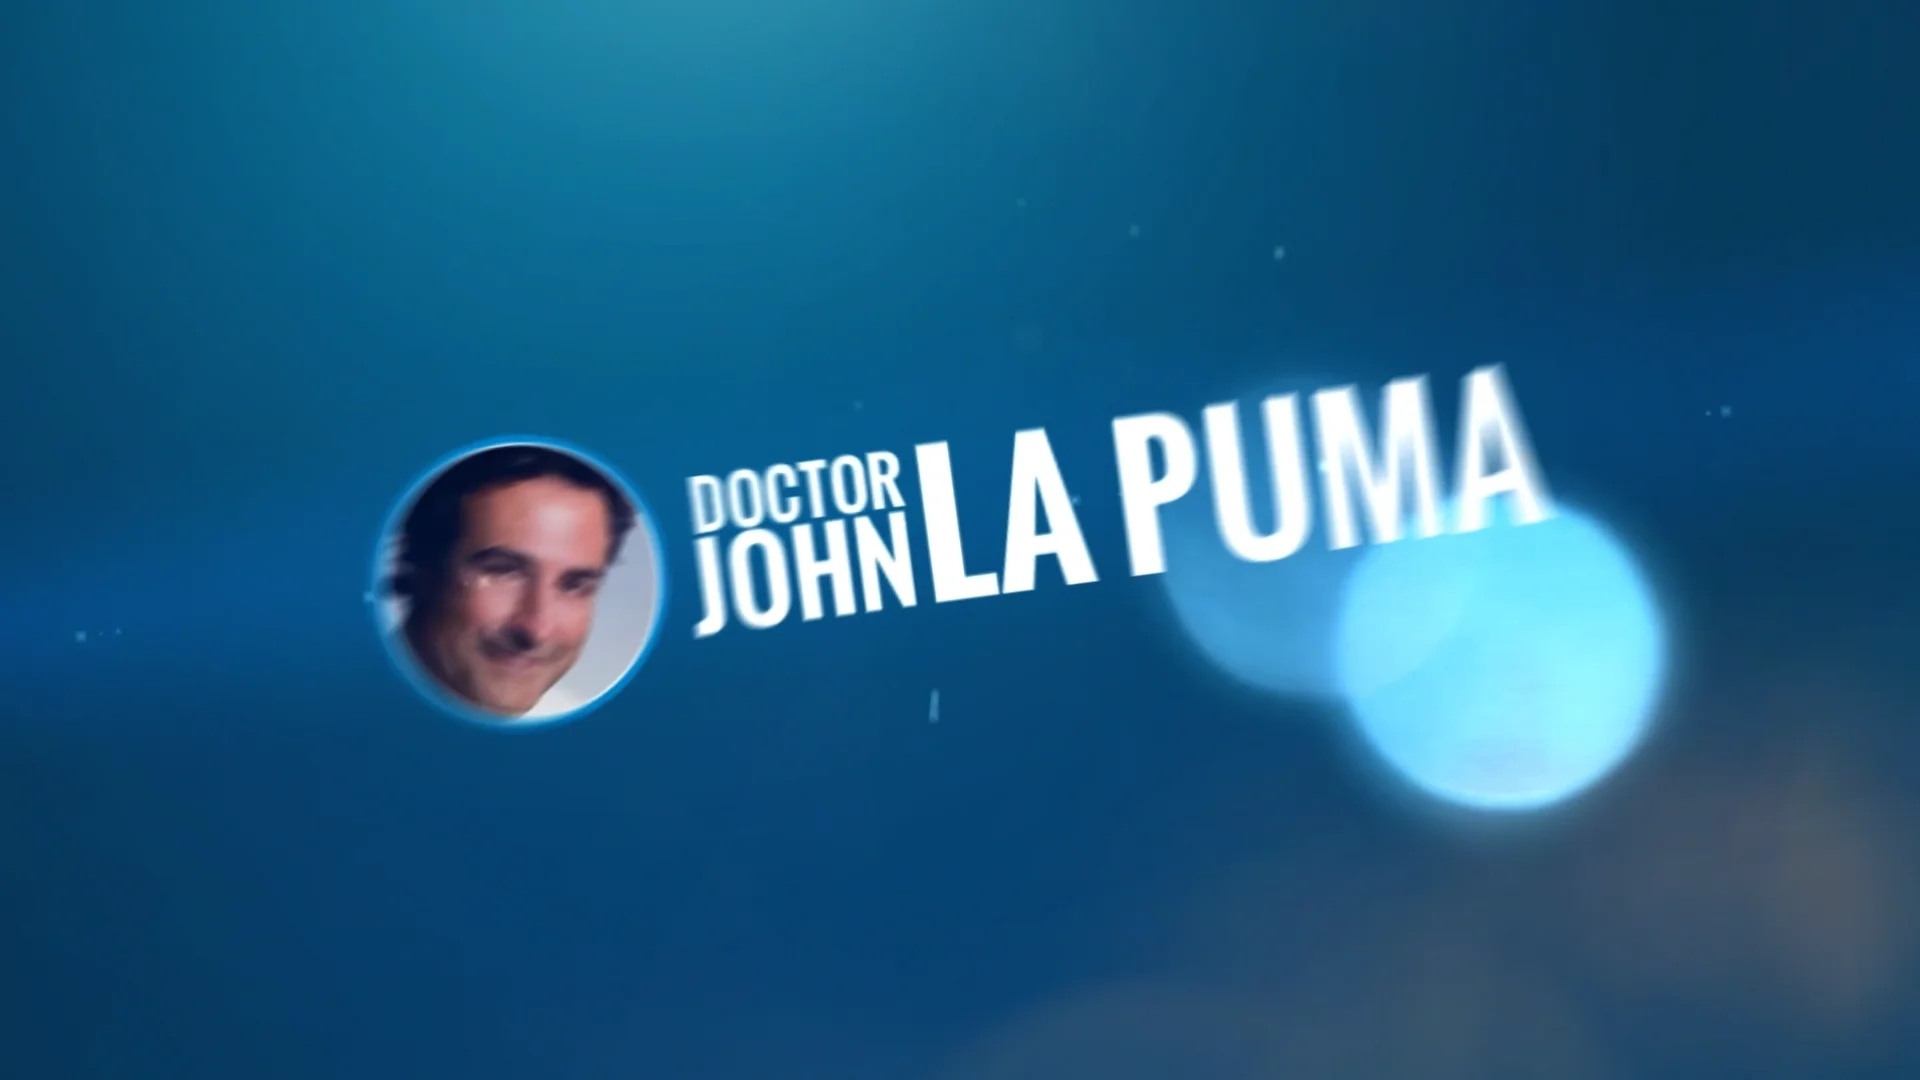 Dr La Puma Speaker Reel